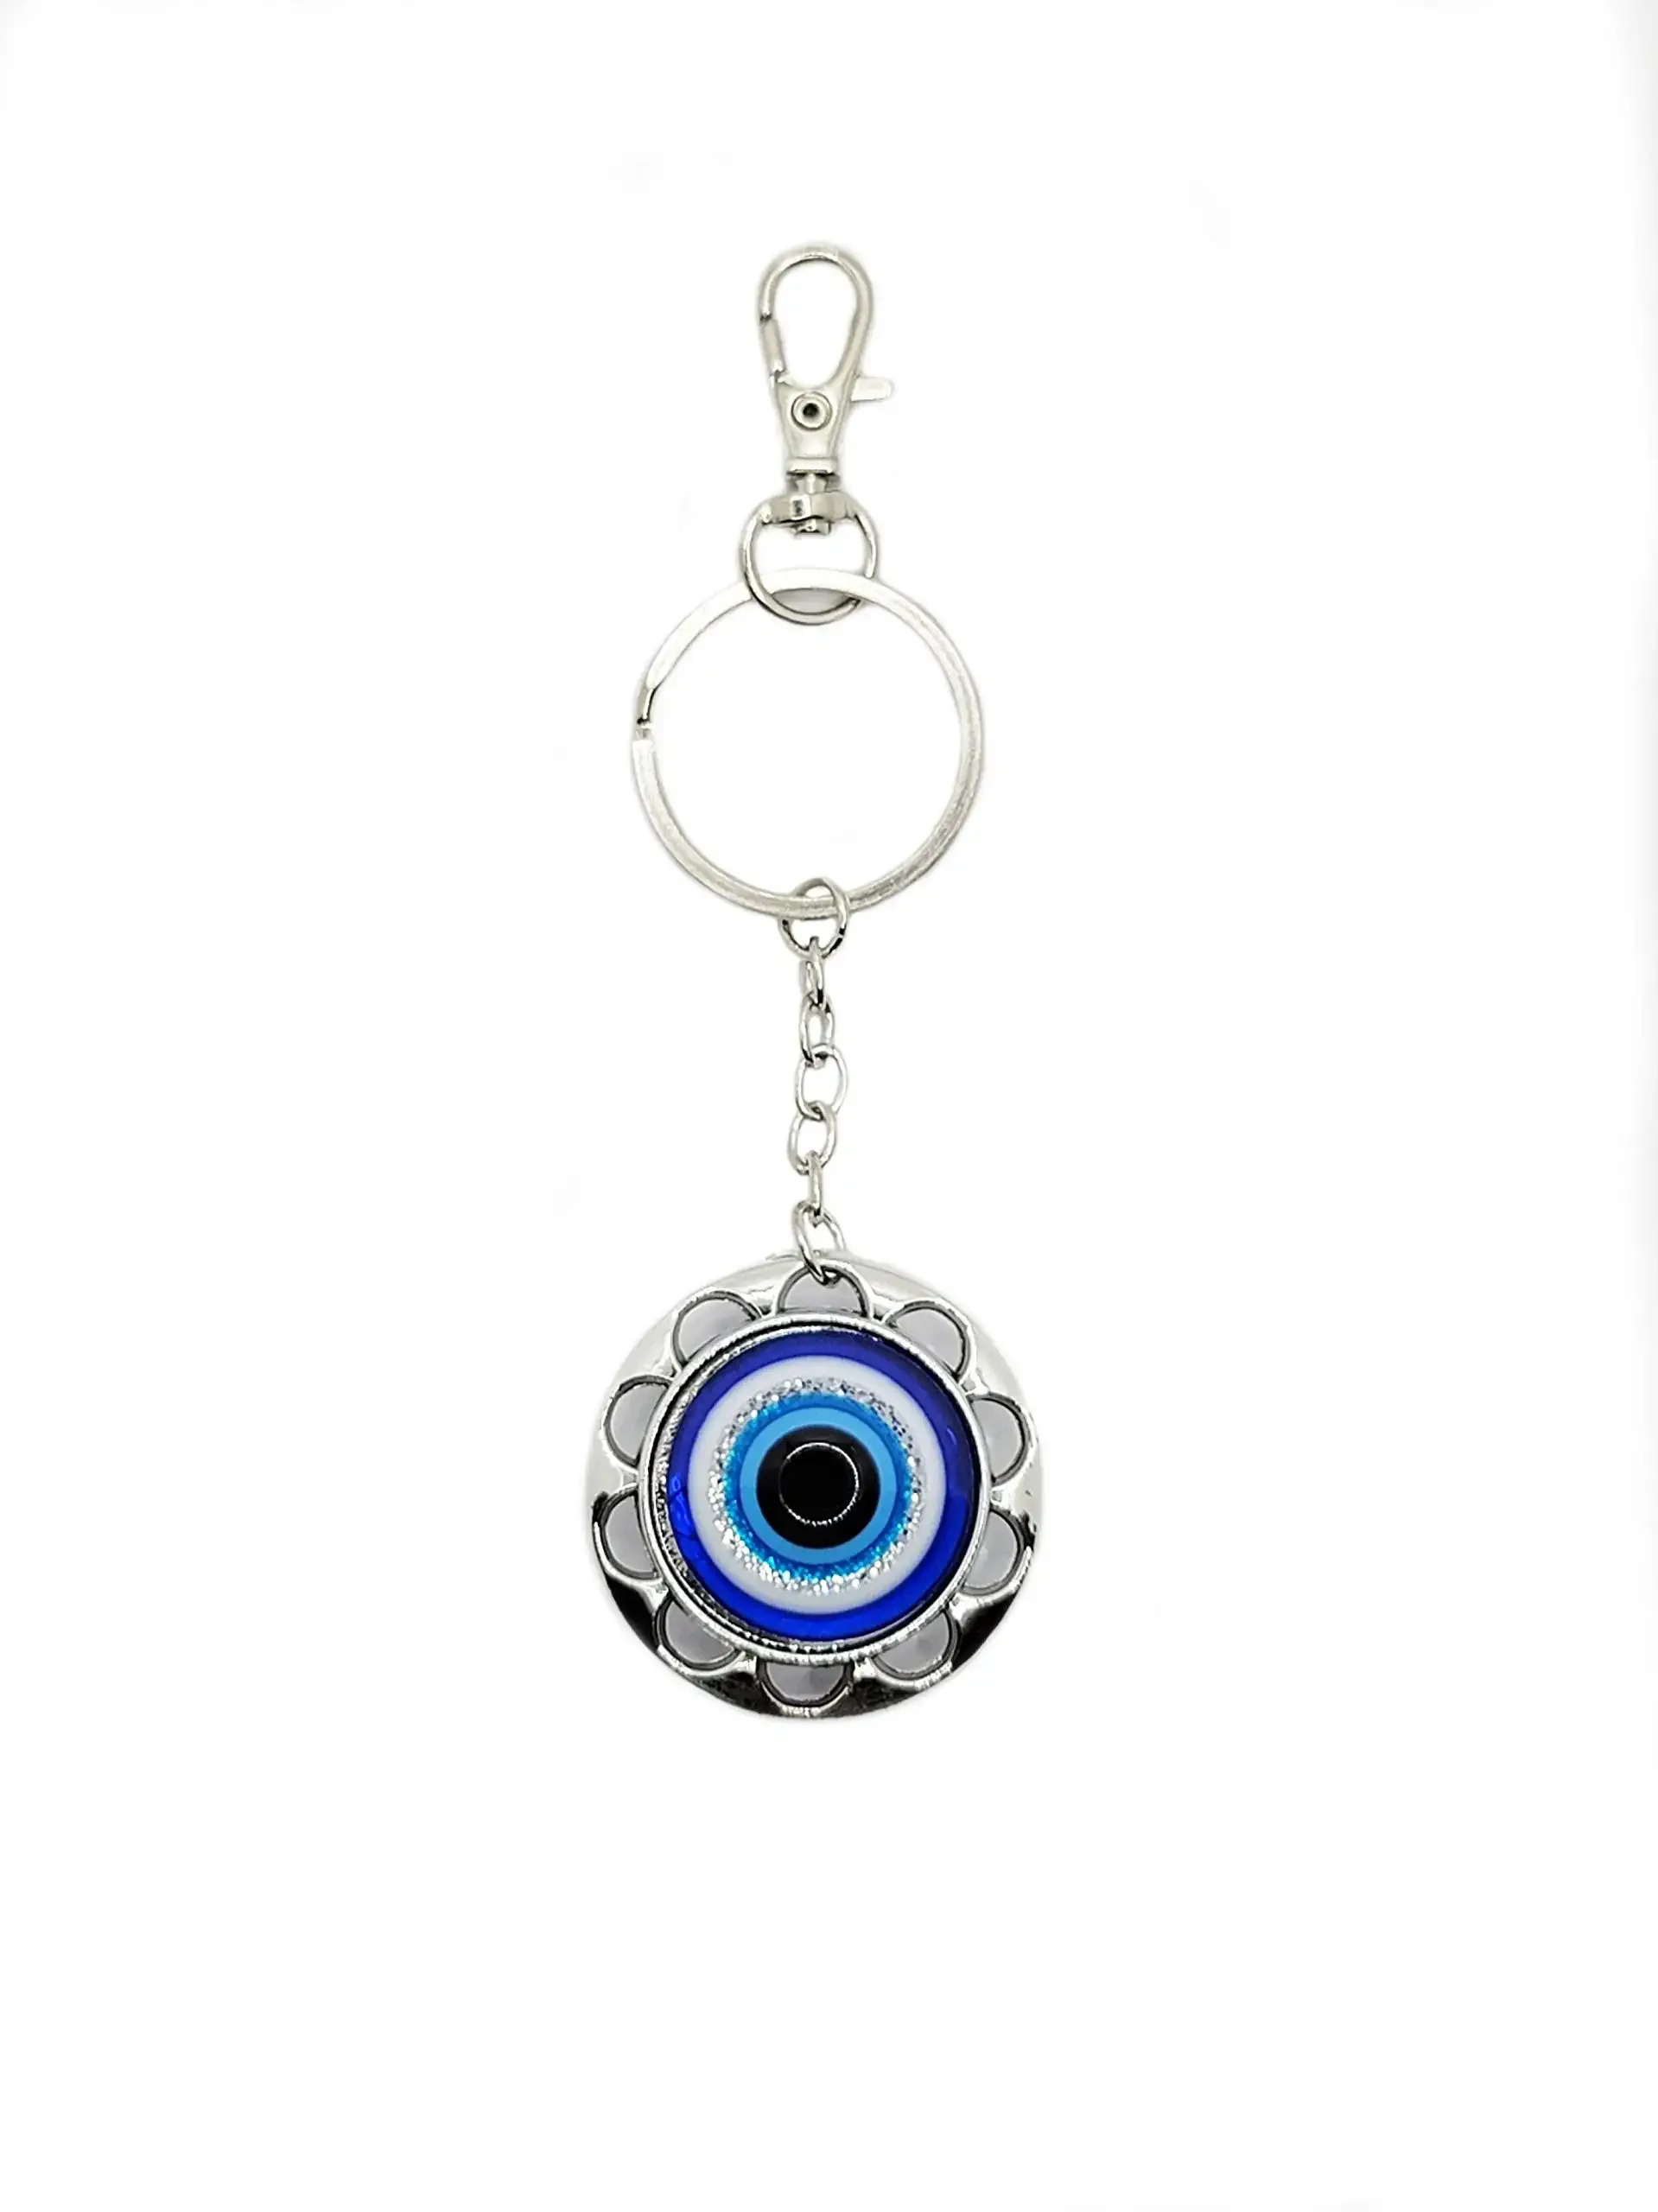 3ml evil eye keychain red for good luck keychain amulet charm for women or men keyring car decor turkish nazar protection keychain 5 blue standart